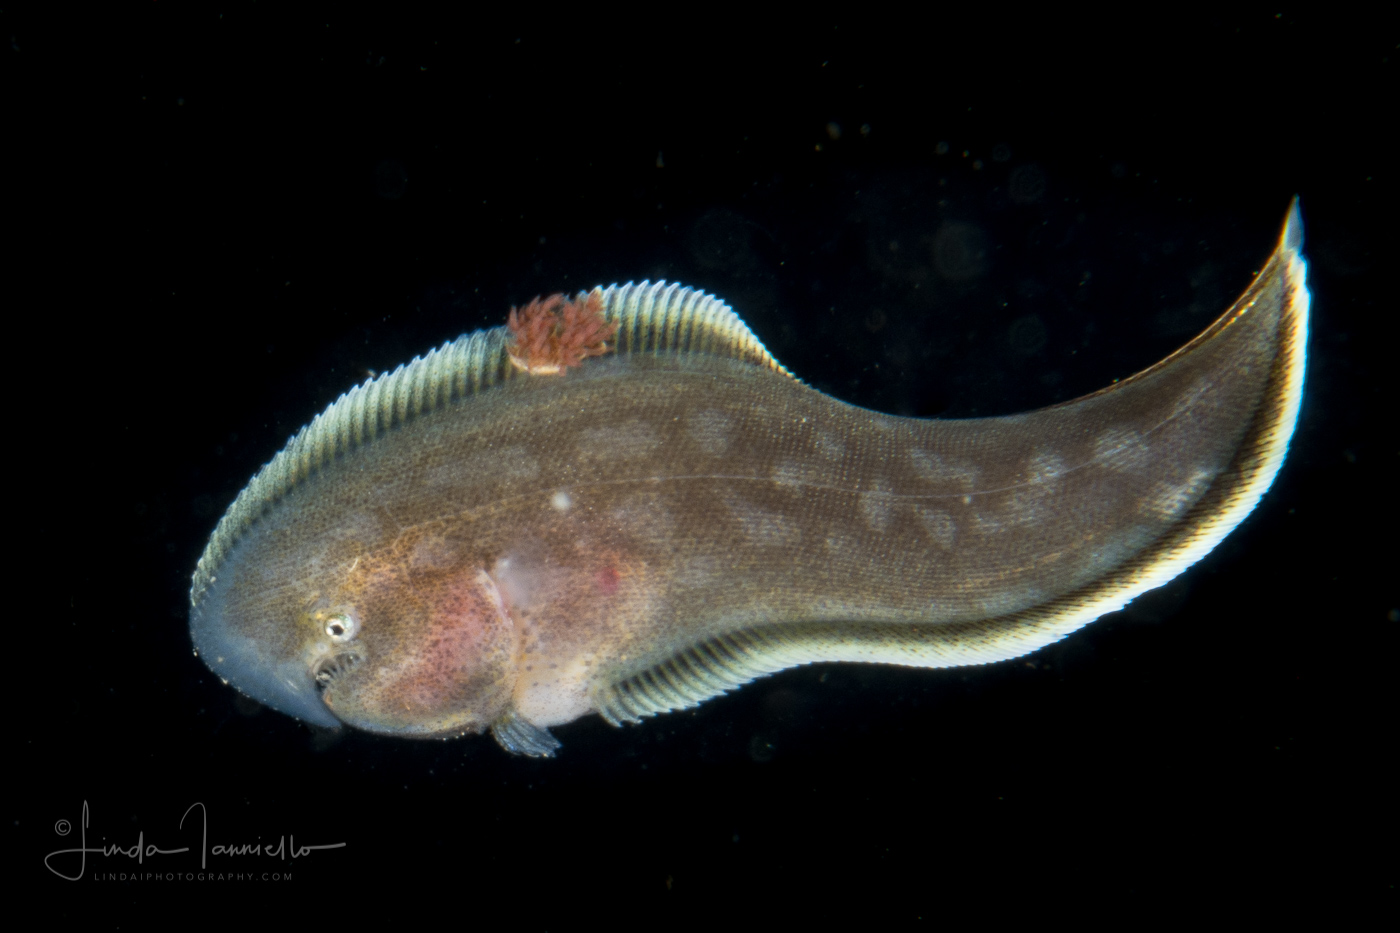 Tonguefish - genus Paraplagusia of the flatfish family Cynoglossidae